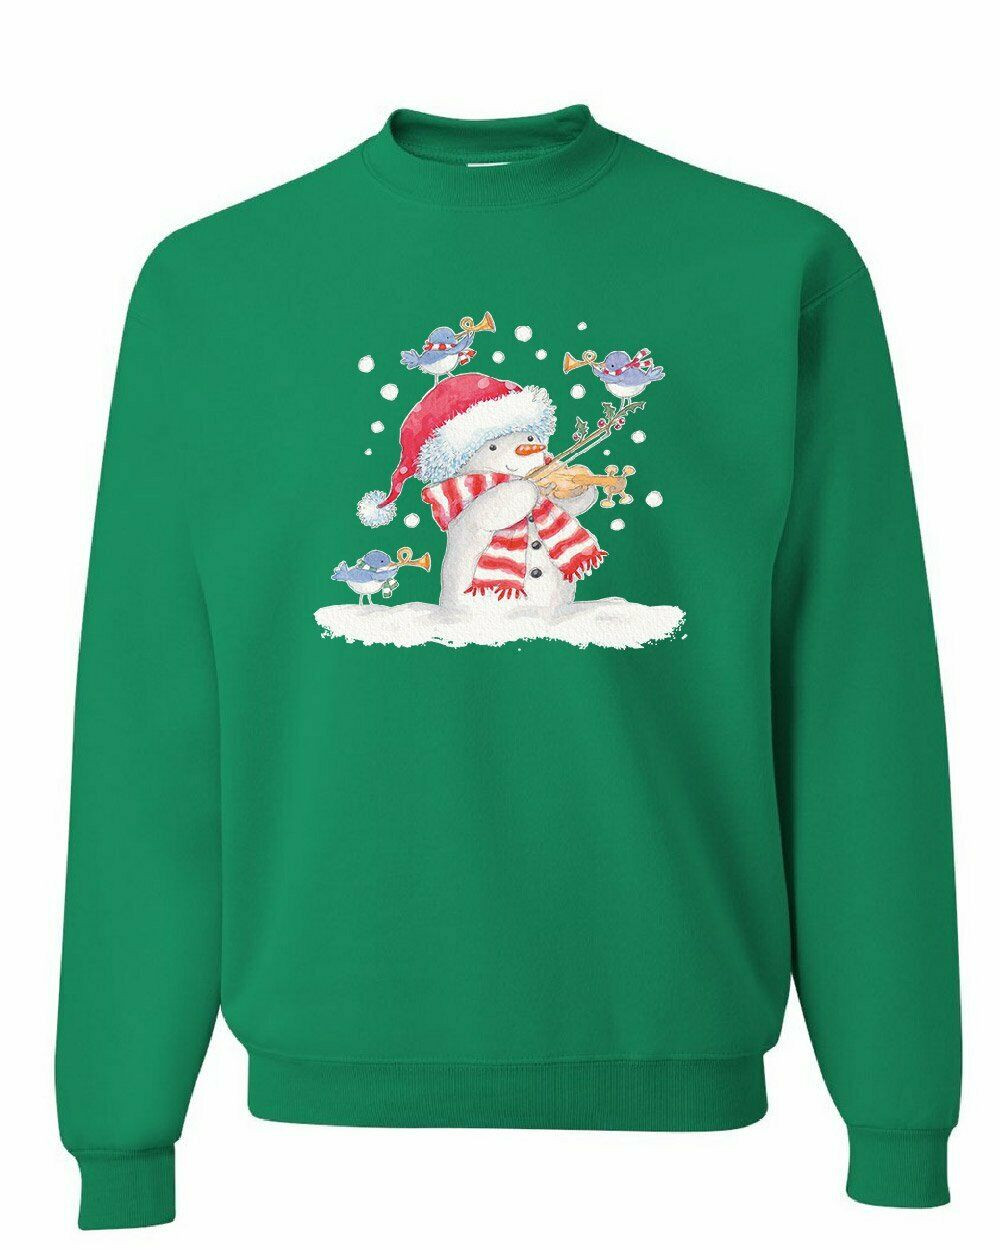 Snowman Playing a Violin Sweatshirt Merry Christmas  Snowman happiness funny birds Style: Sweatshirt, Color: Green